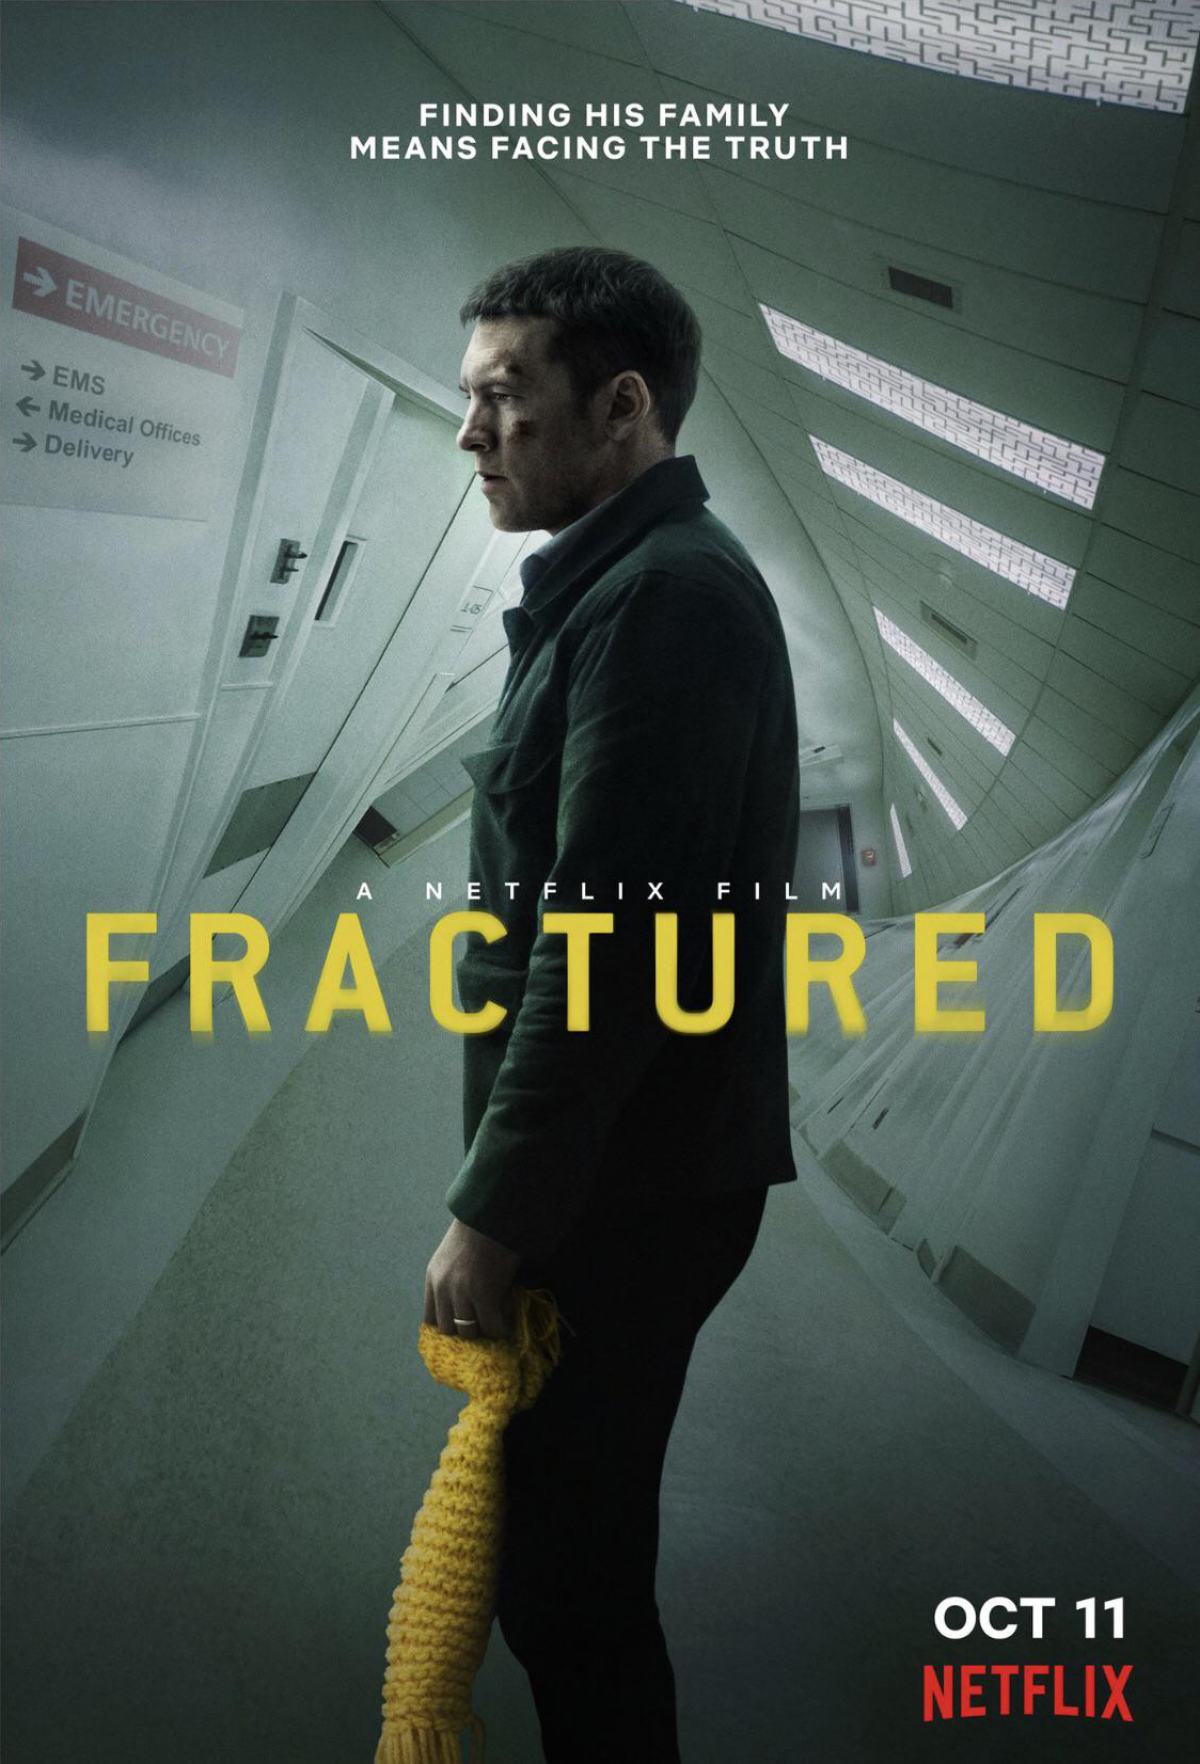 Fractured (2019) Poster #1 - Trailer Addict1200 x 1764